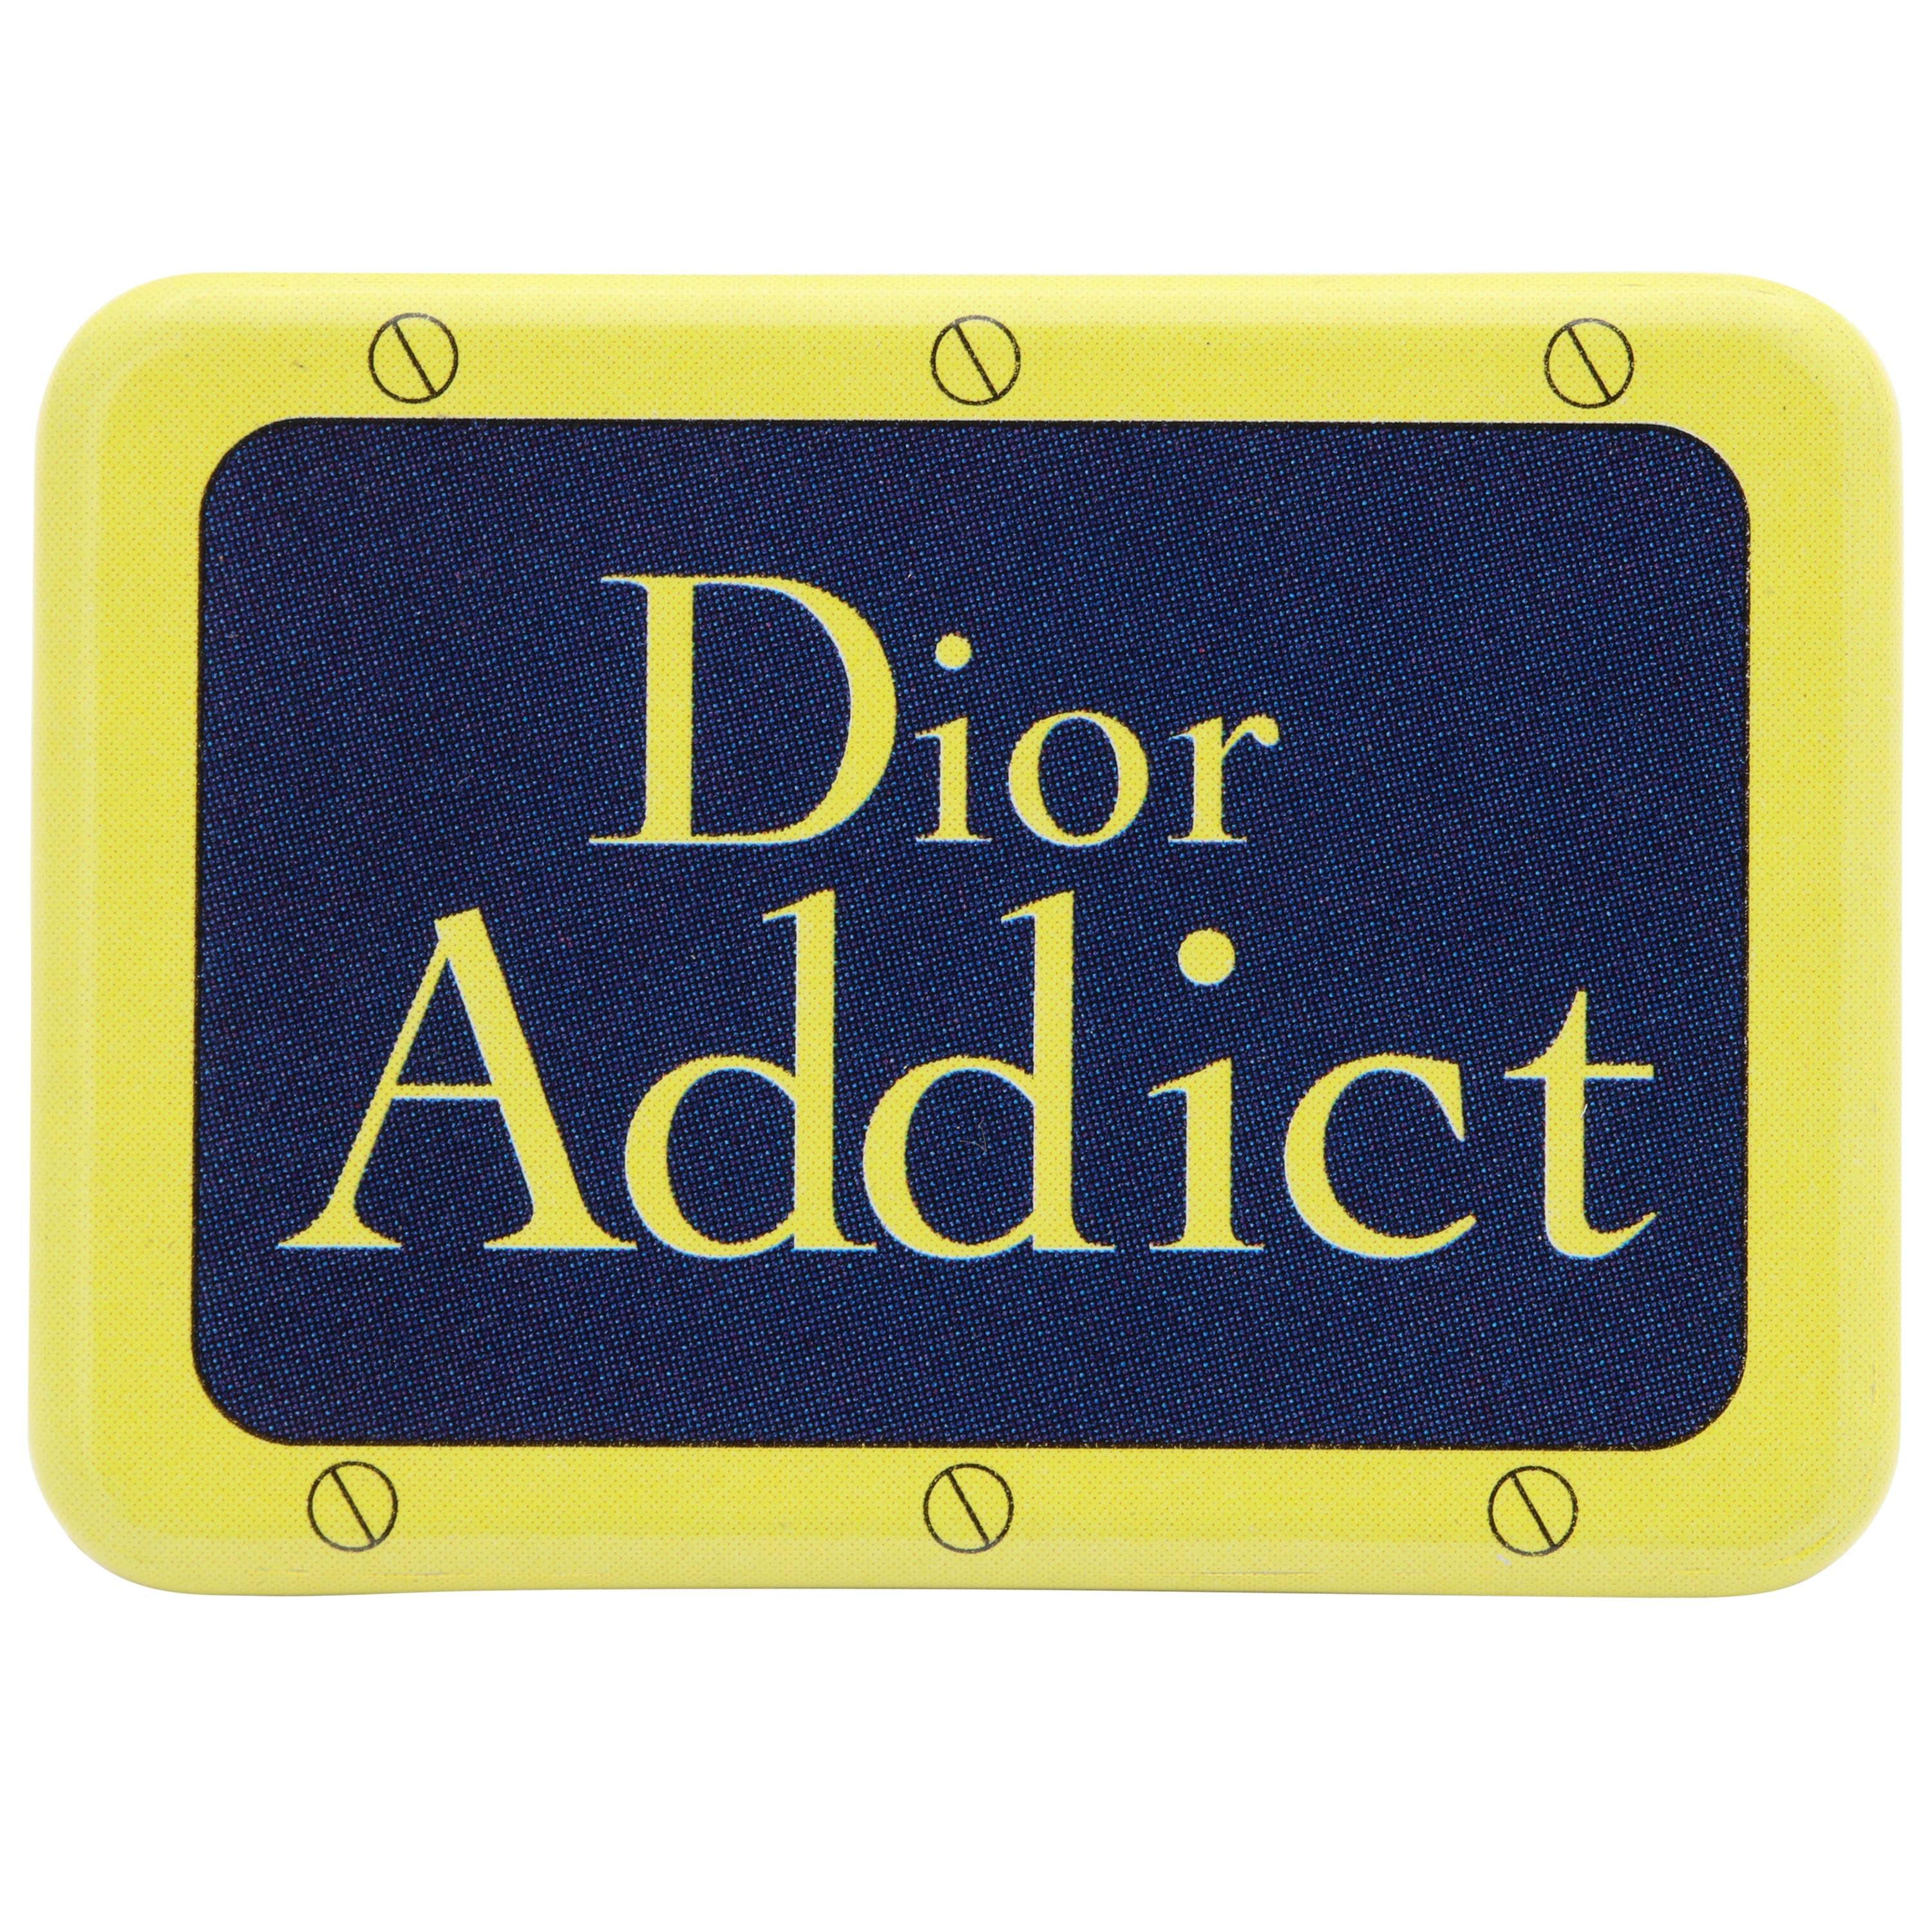 John Galliano for Christian Dior "Dior Addict" Pin For Sale